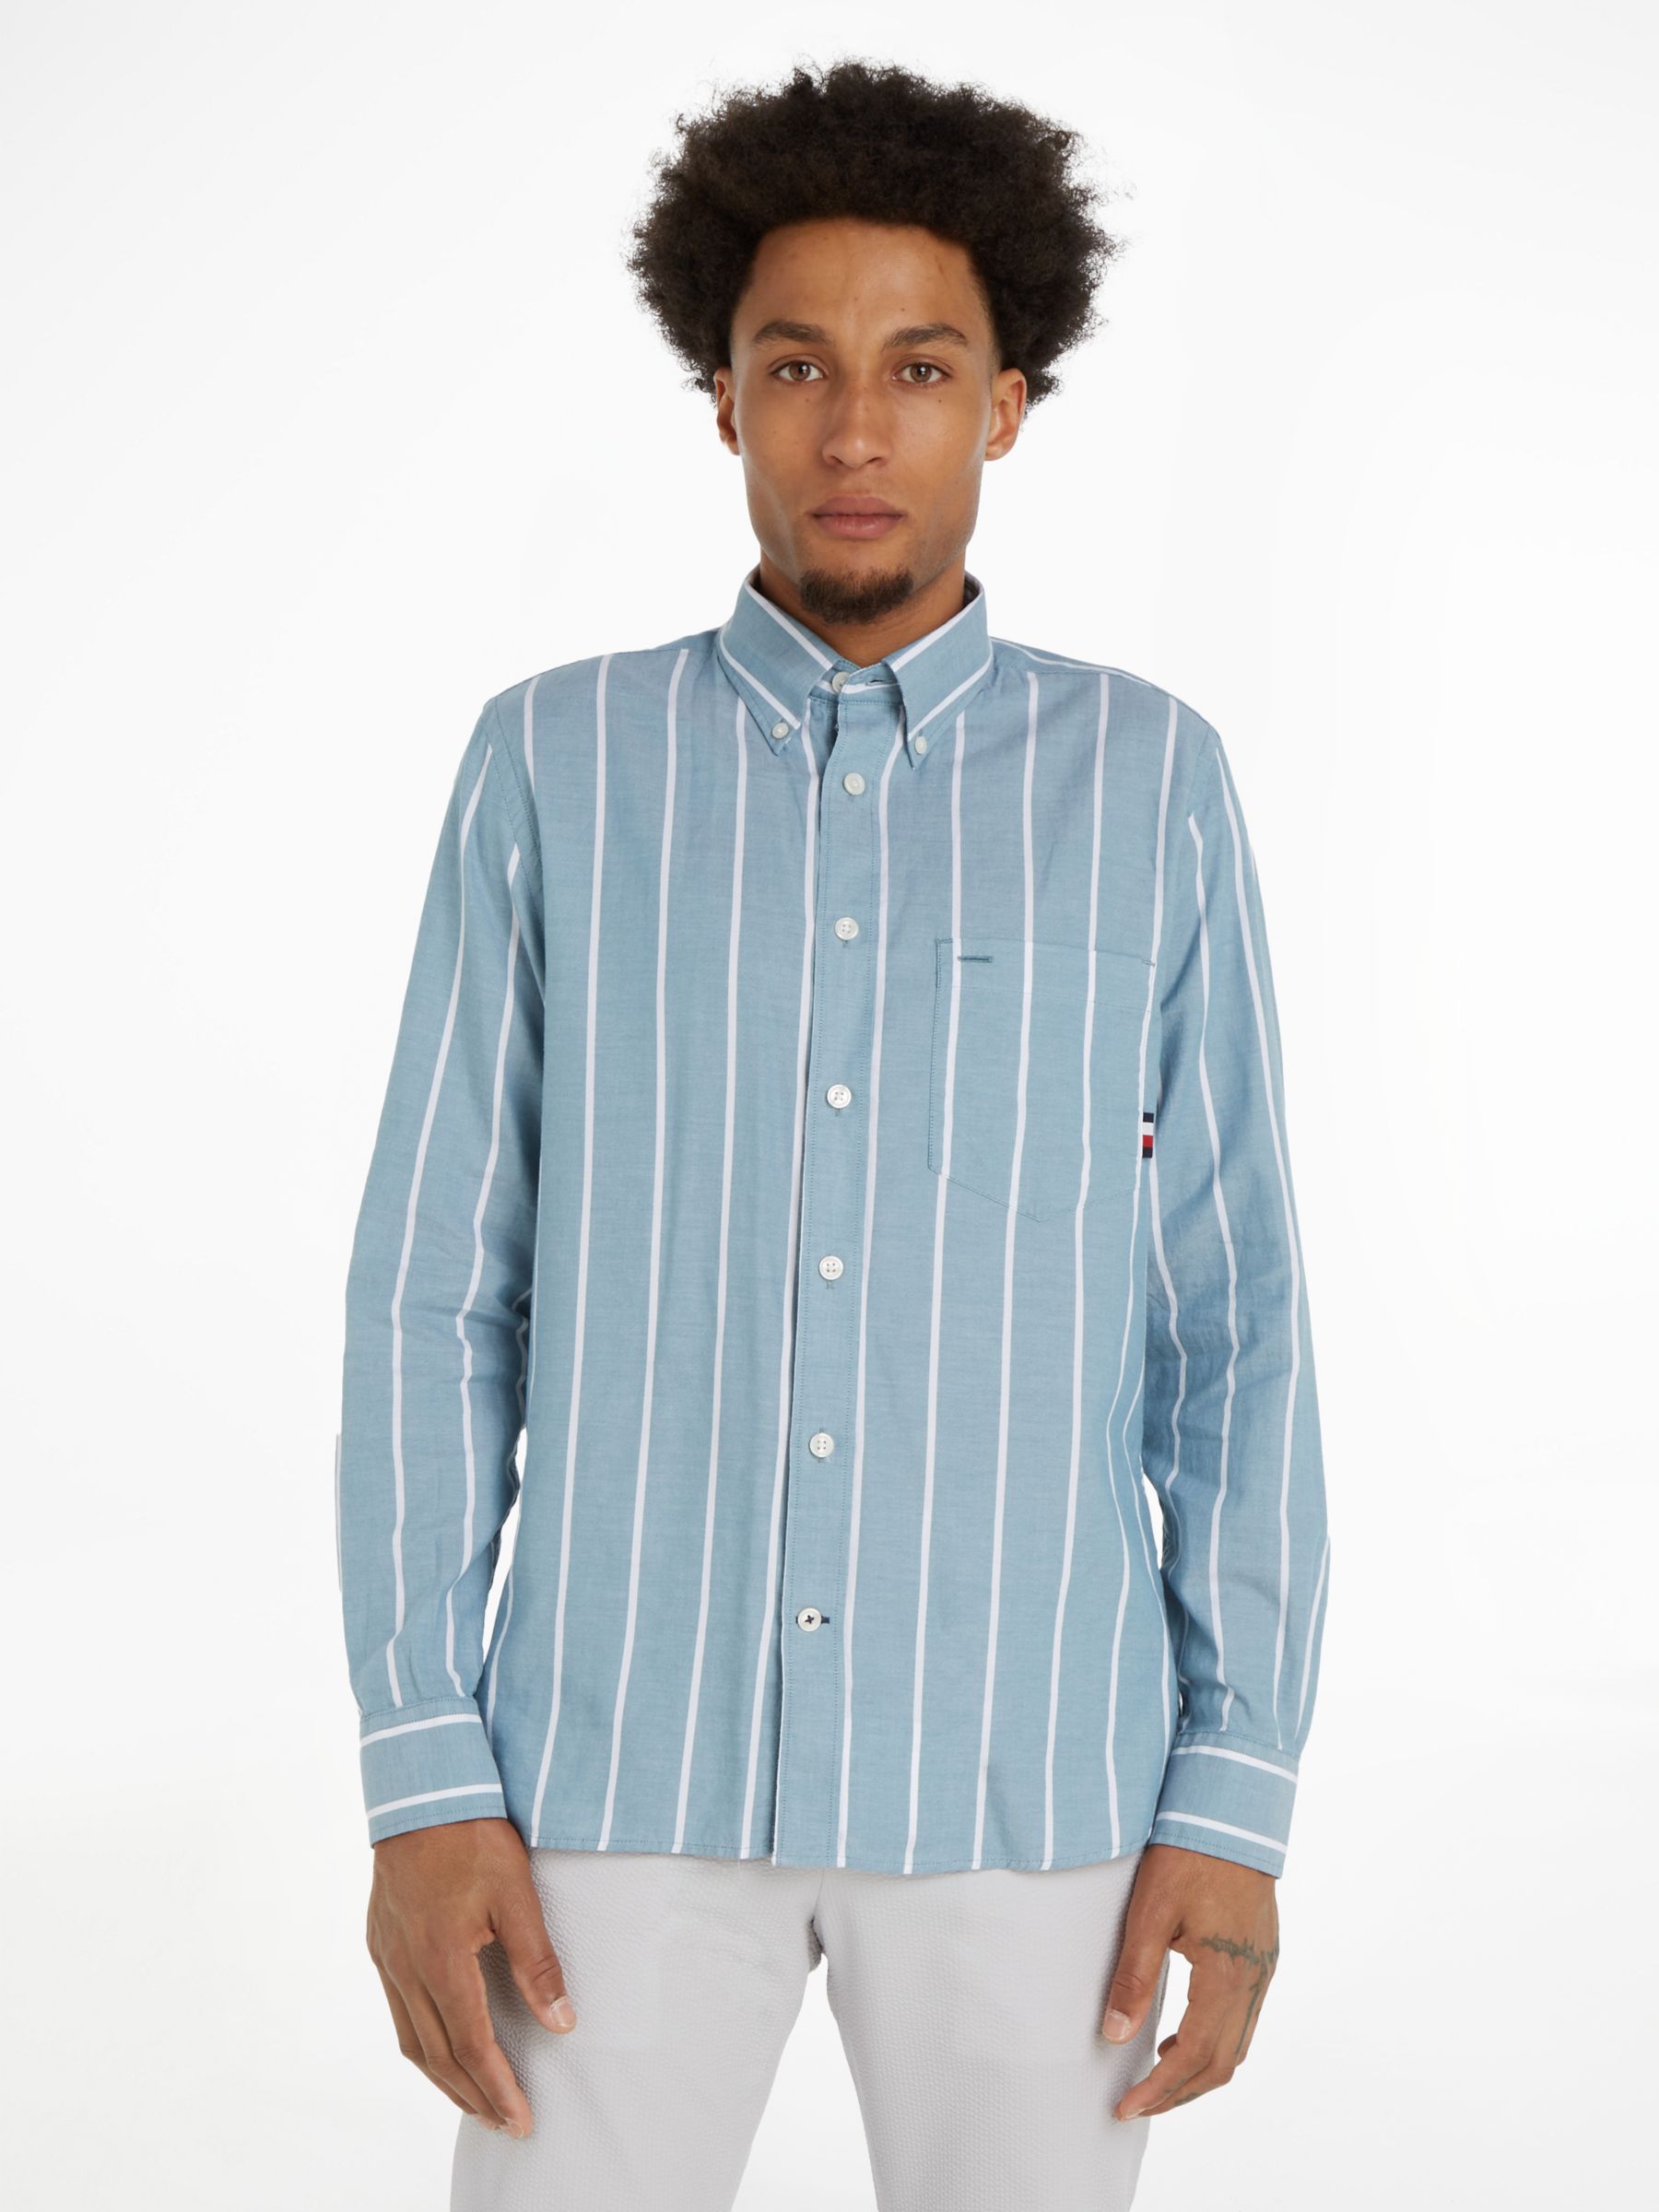 Tommy Hilfiger Oxford Stripe Shirt at John Lewis & Partners